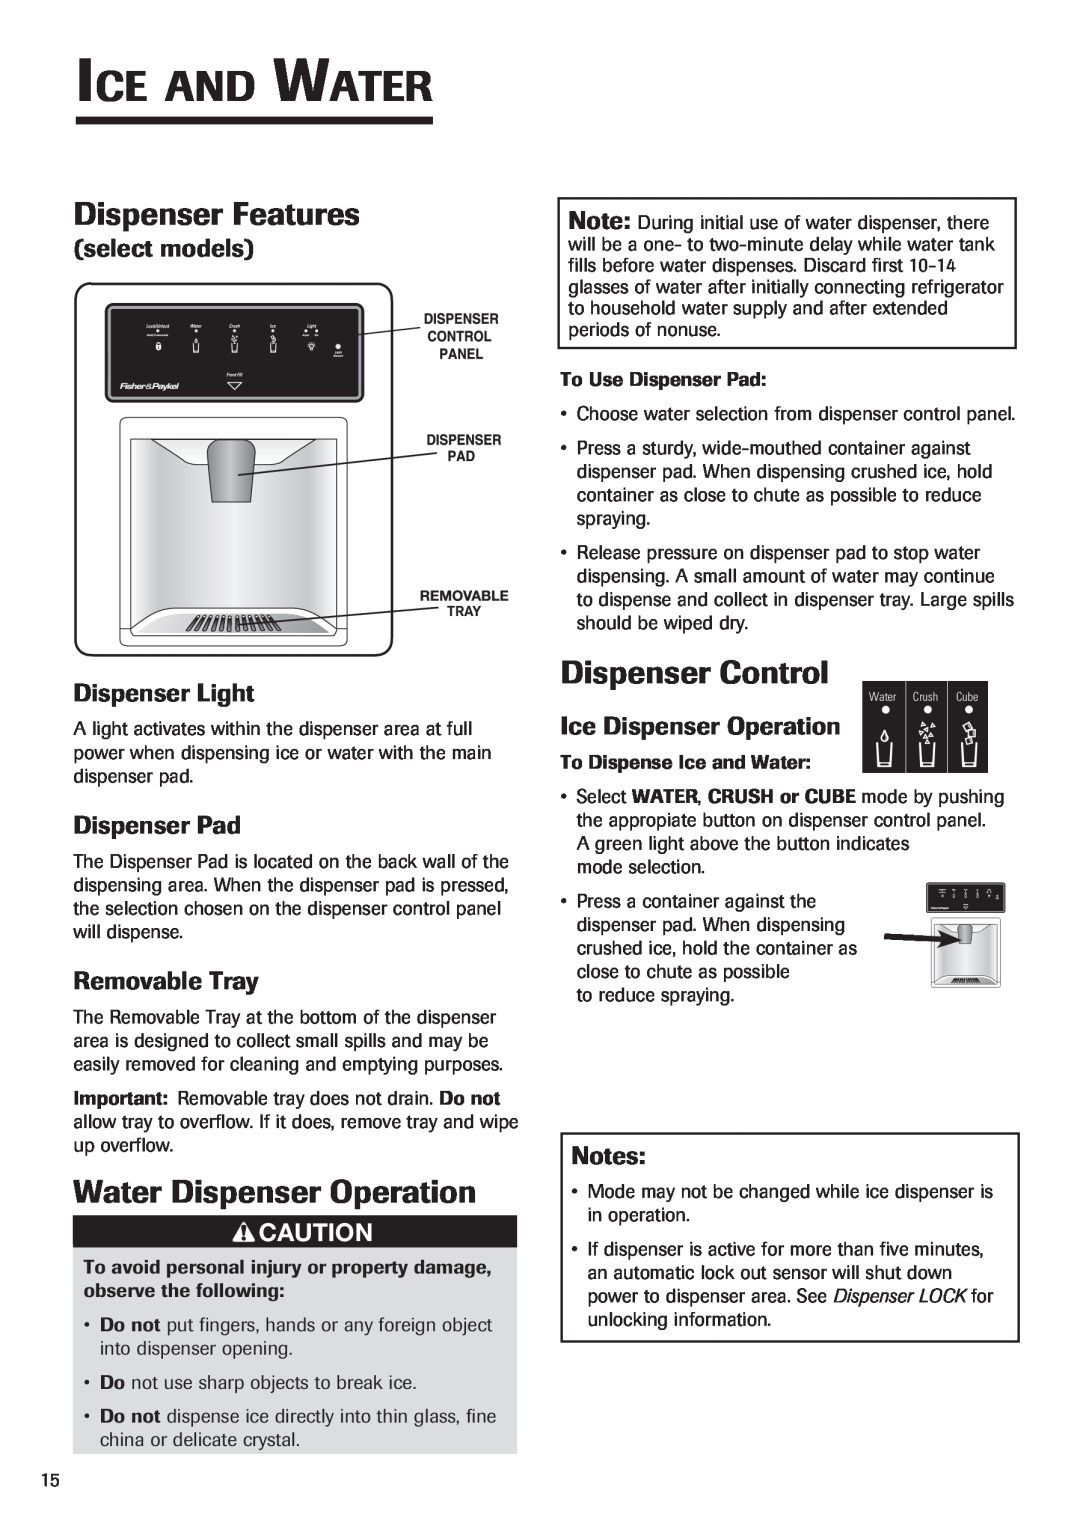 Fisher & Paykel RX256DT7X1 Dispenser Features, Water Dispenser Operation, Dispenser Control, select models Dispenser Light 